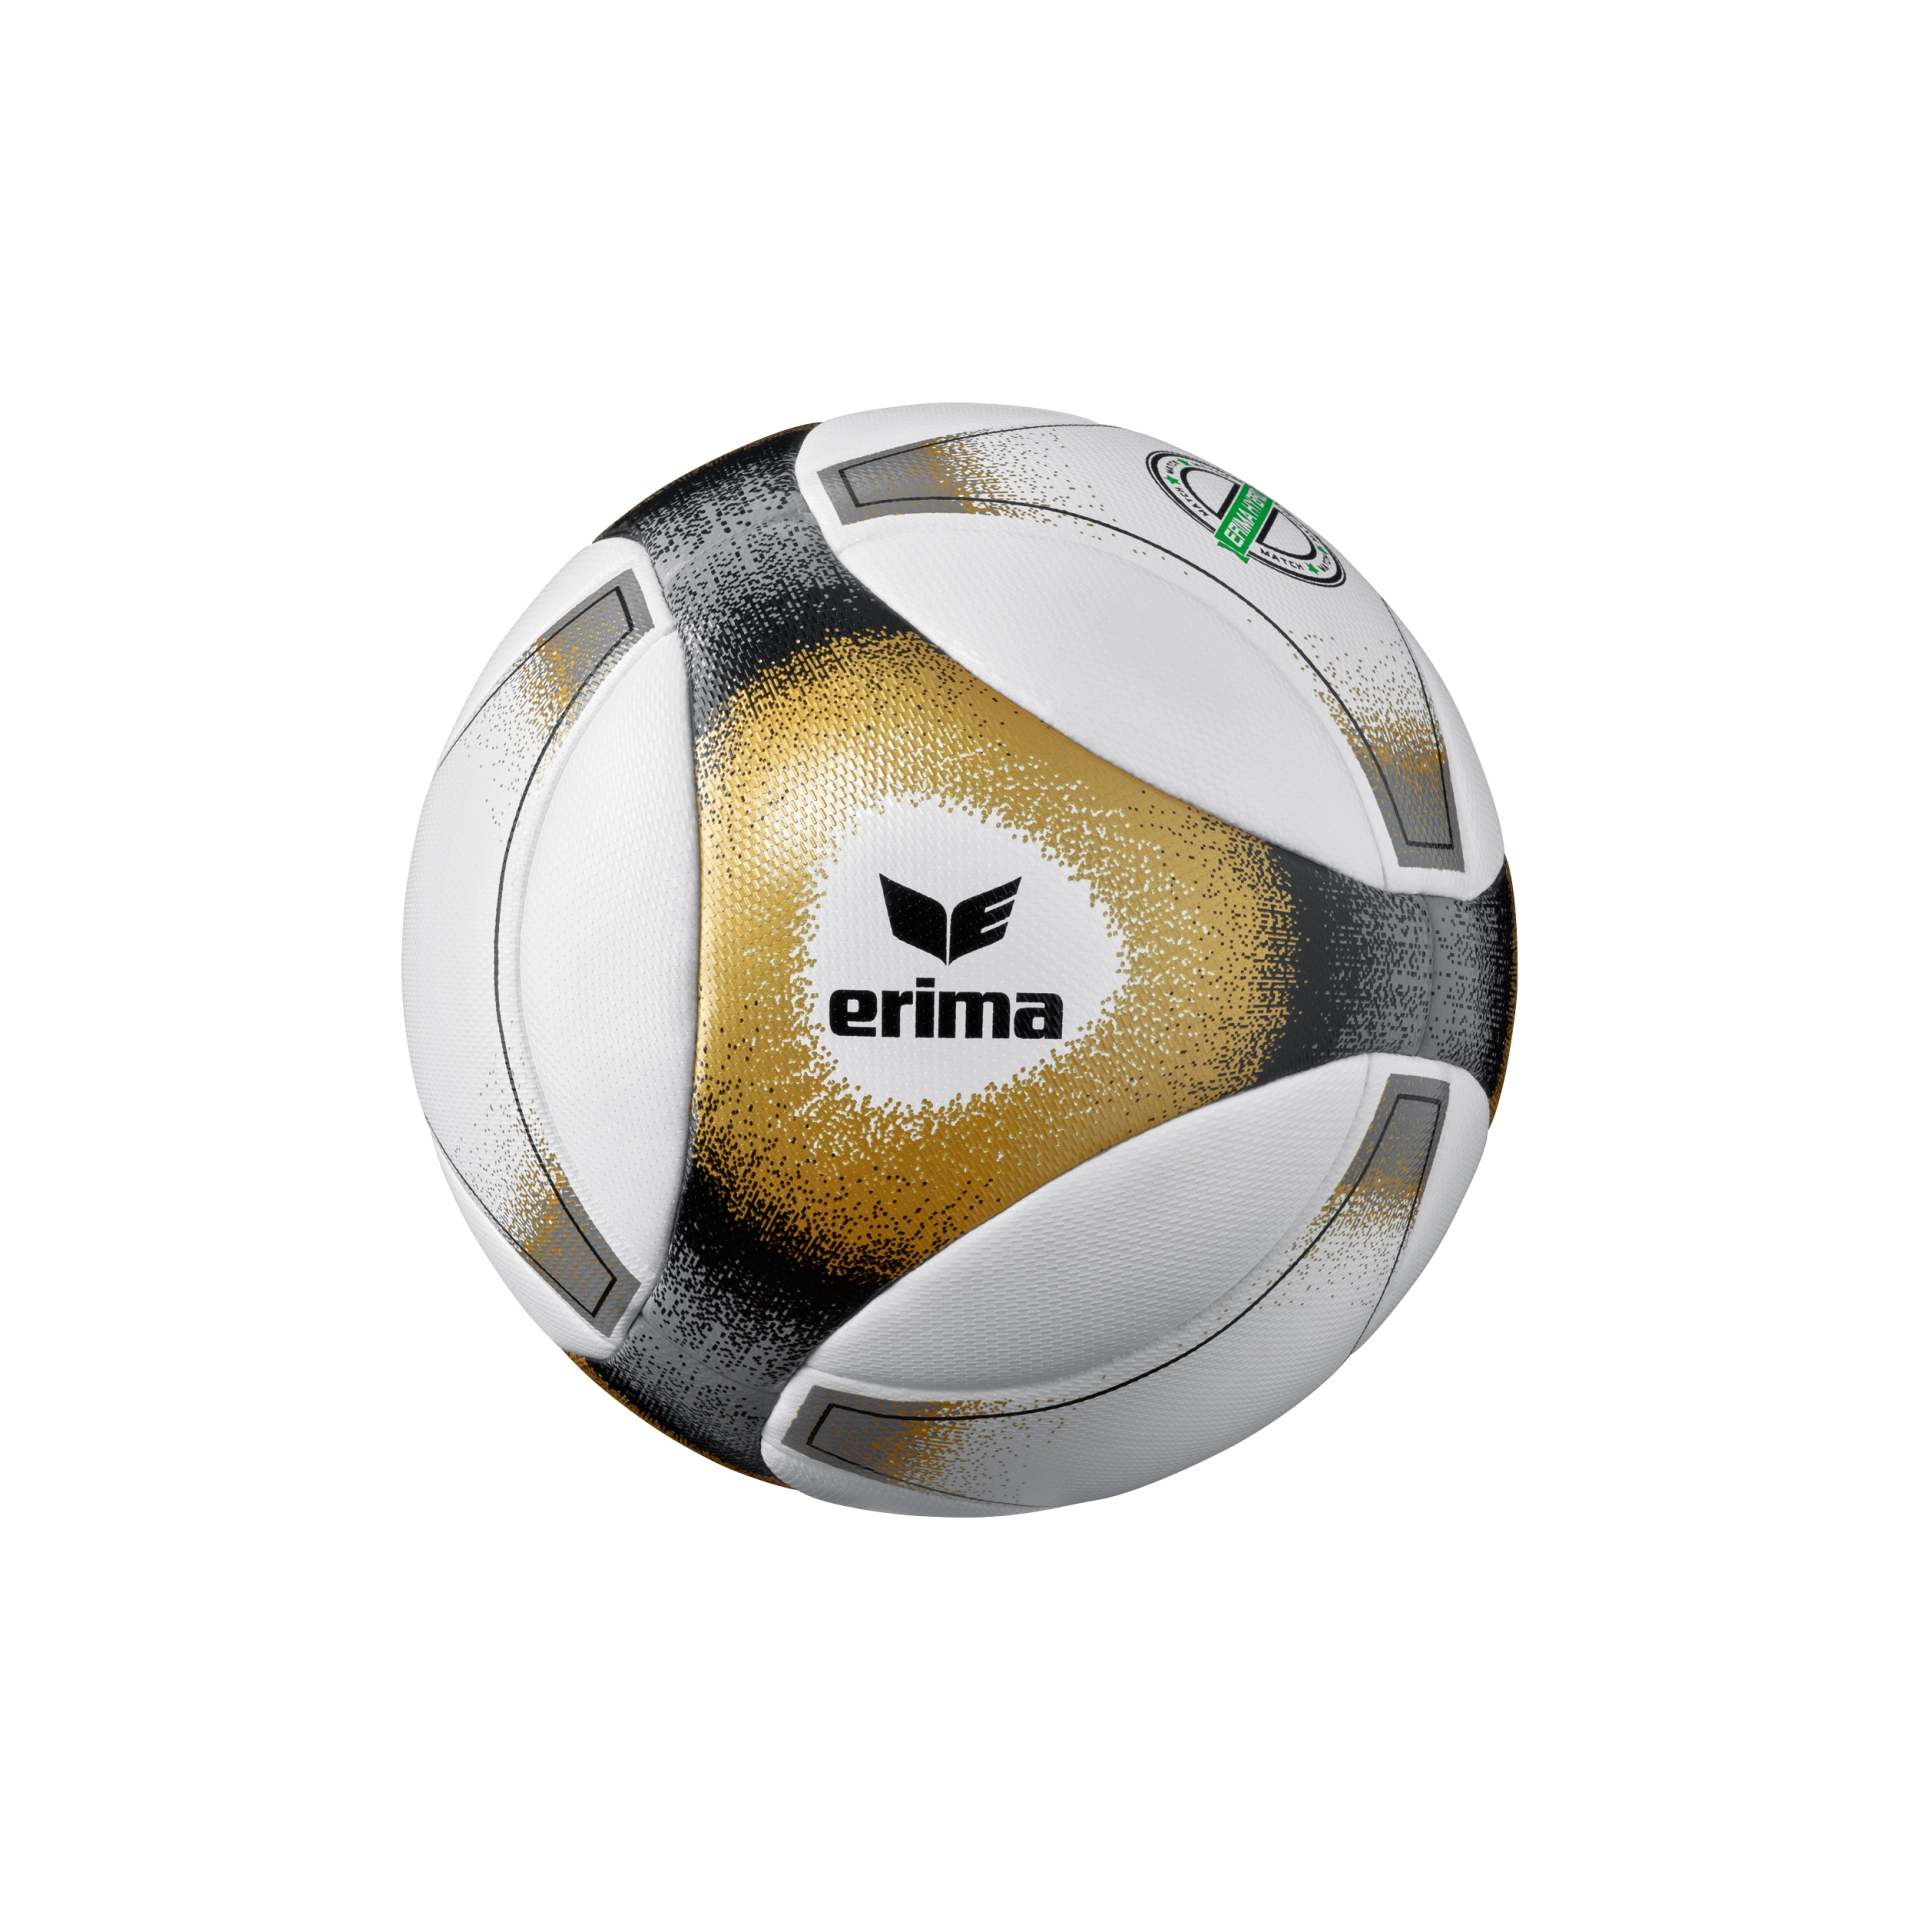 ERIMA Equipment___Fussbaelle_Hybrid_Match_Spielball 7191901 950151 black/gold